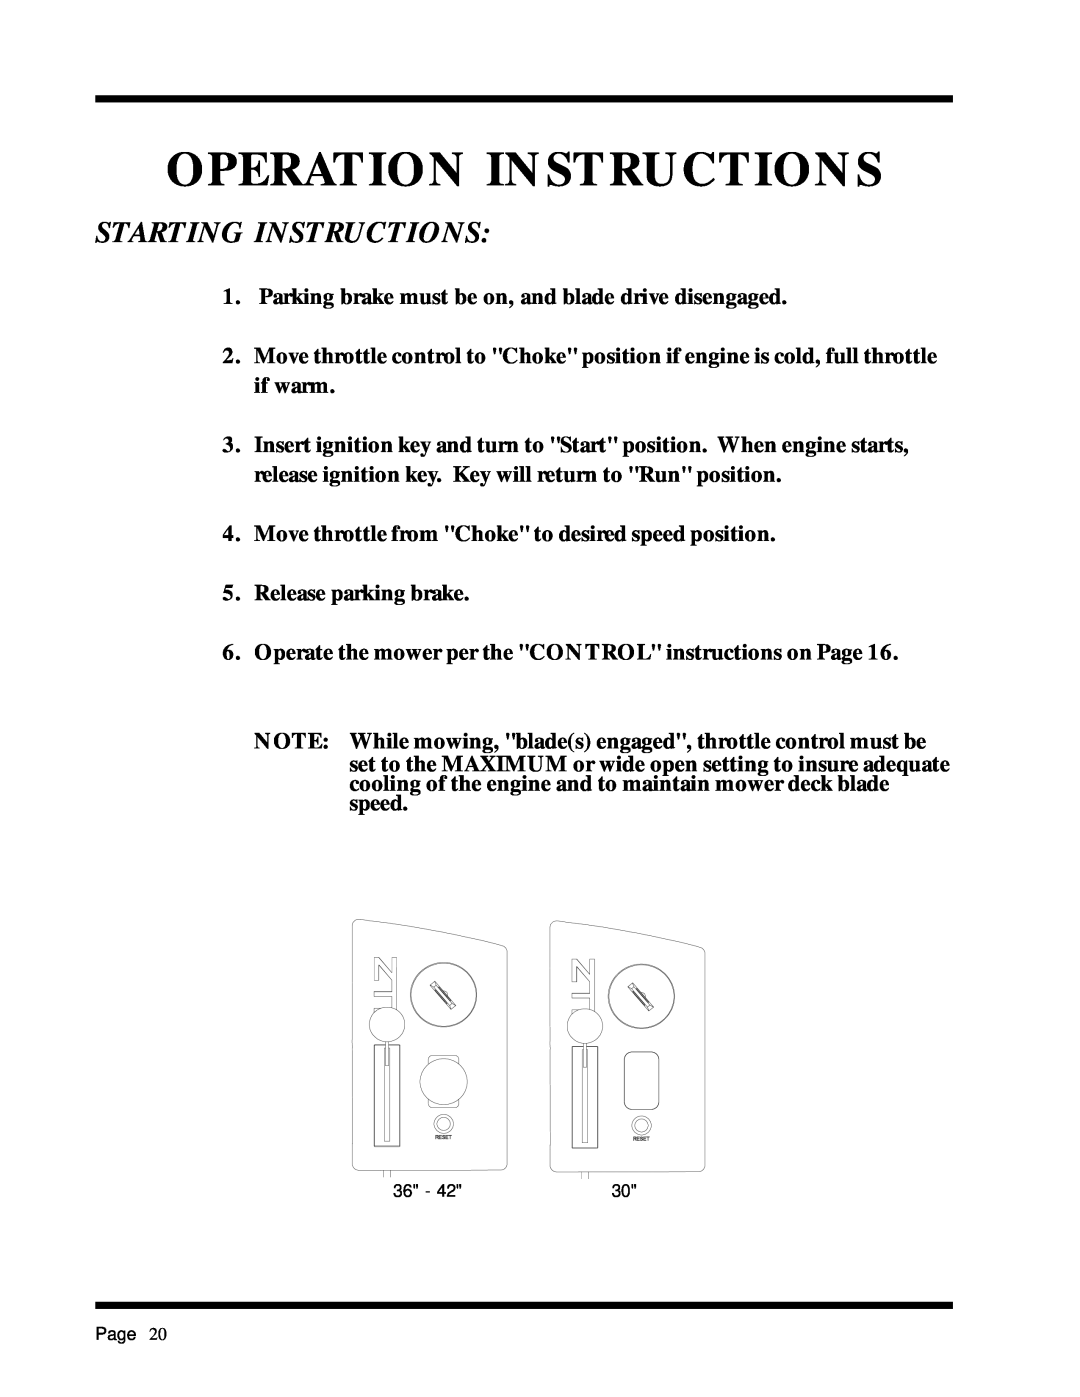 Dixon 6025 manual Starting Instructions, Operation Instructions 